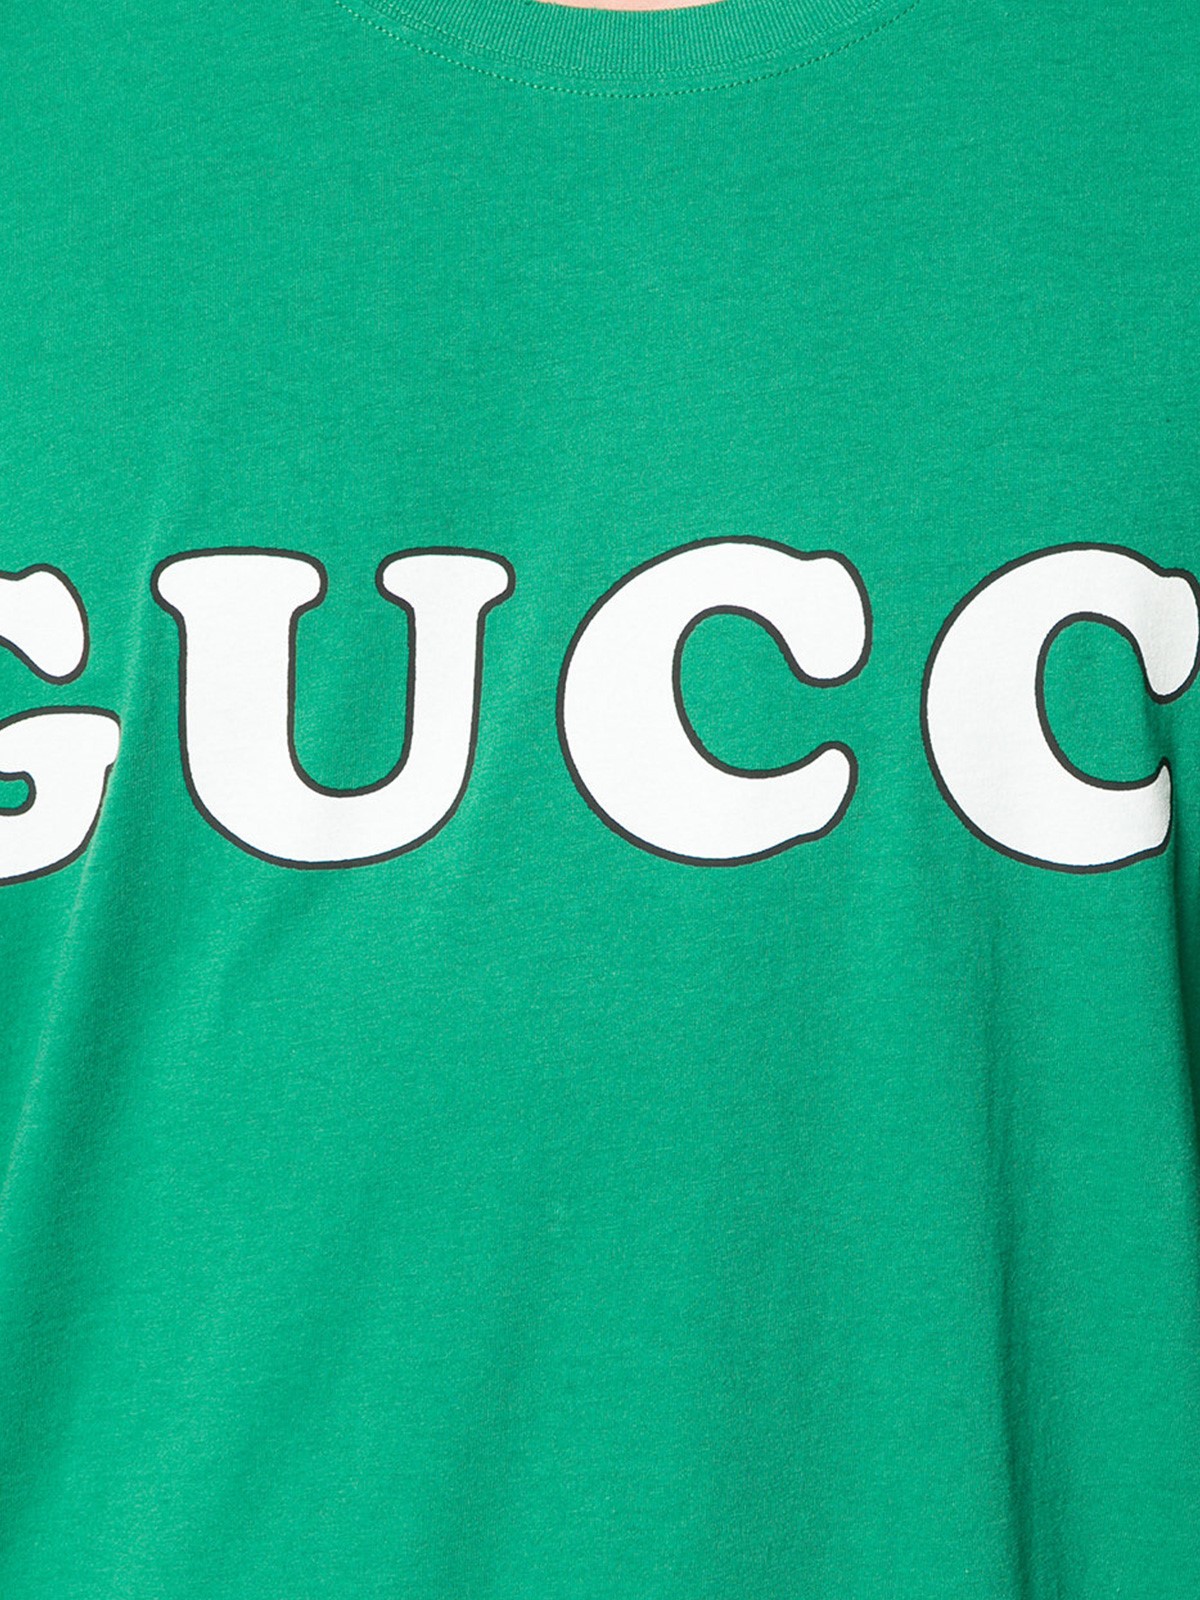 gucci green logo